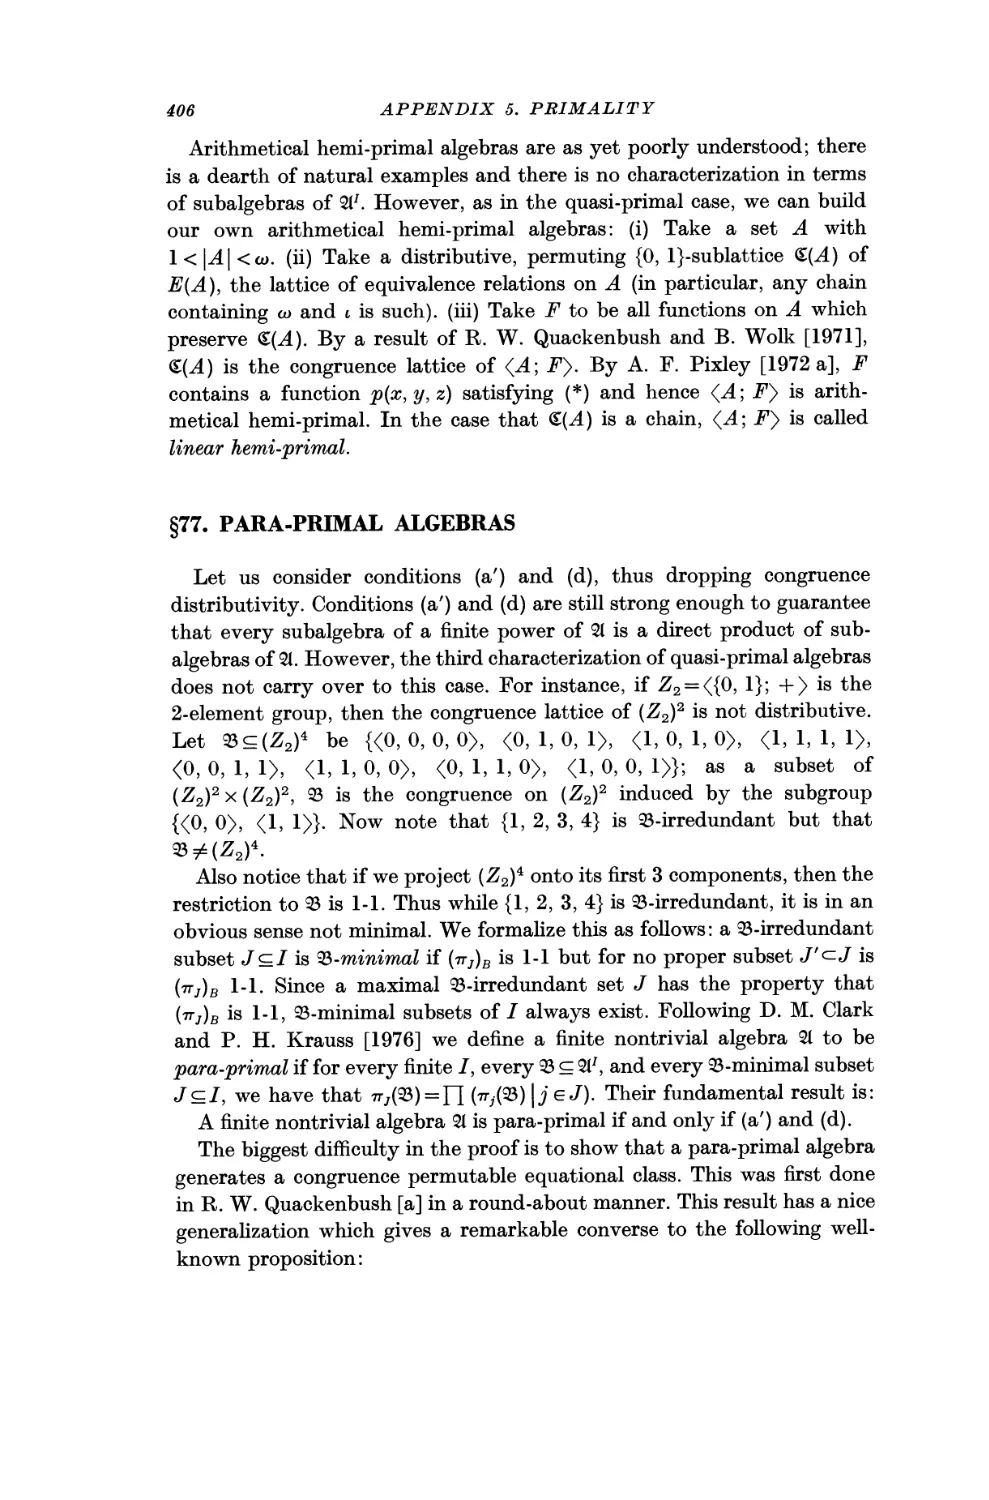 §77. Para-Primal Algebras